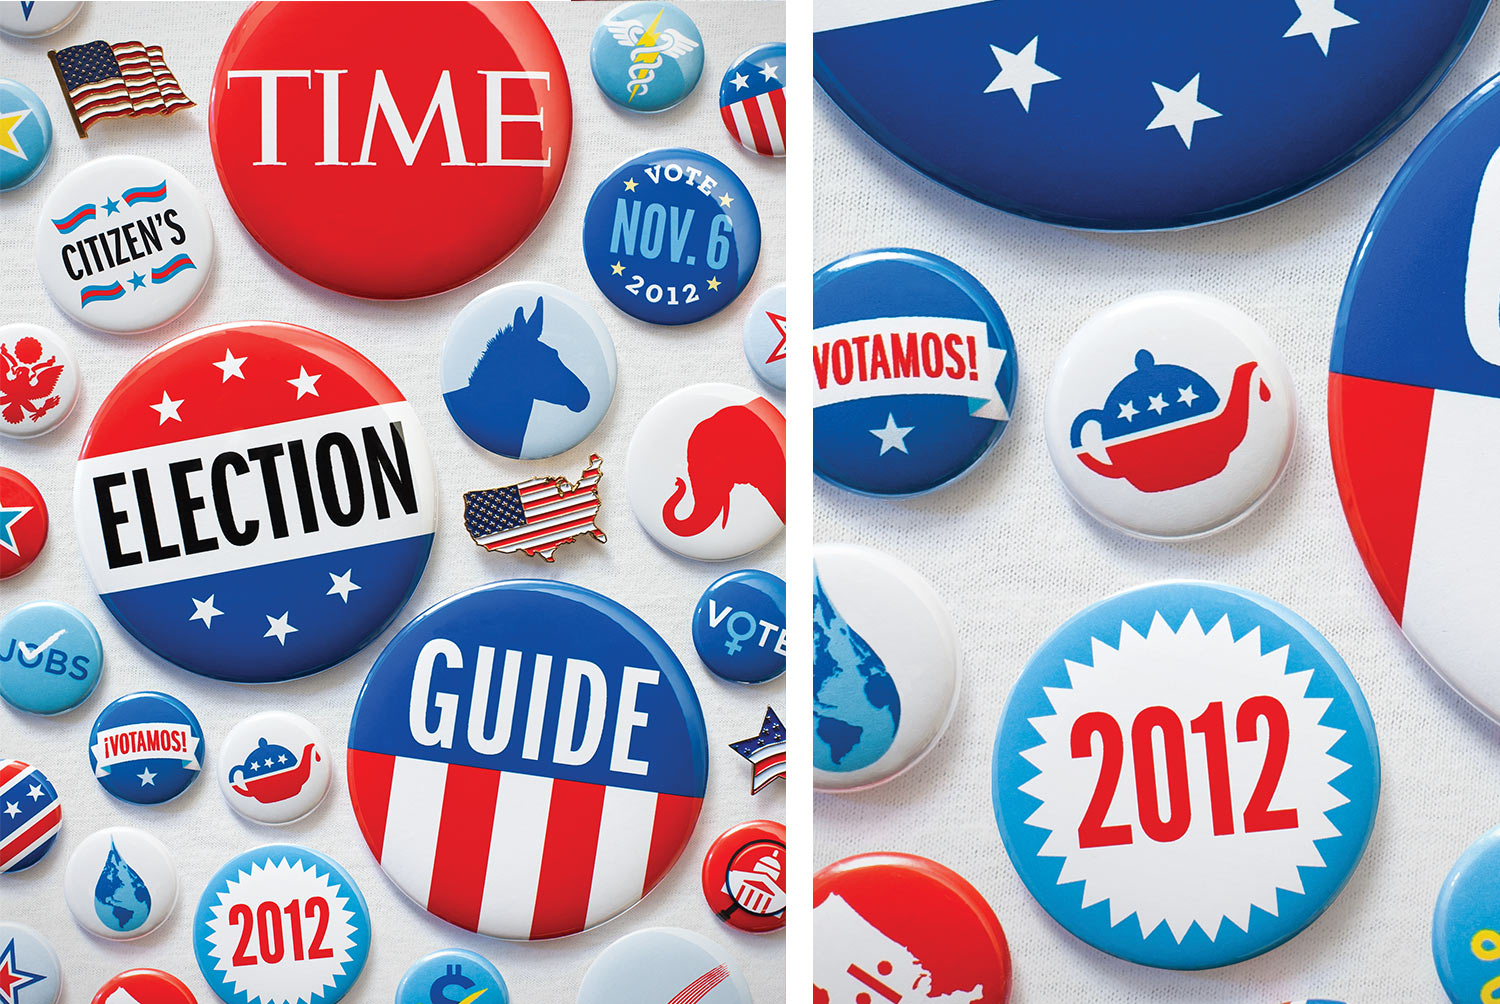   2012 Election Guide.&nbsp; Time Magazine , Art Director:&nbsp;D.W. Pine  